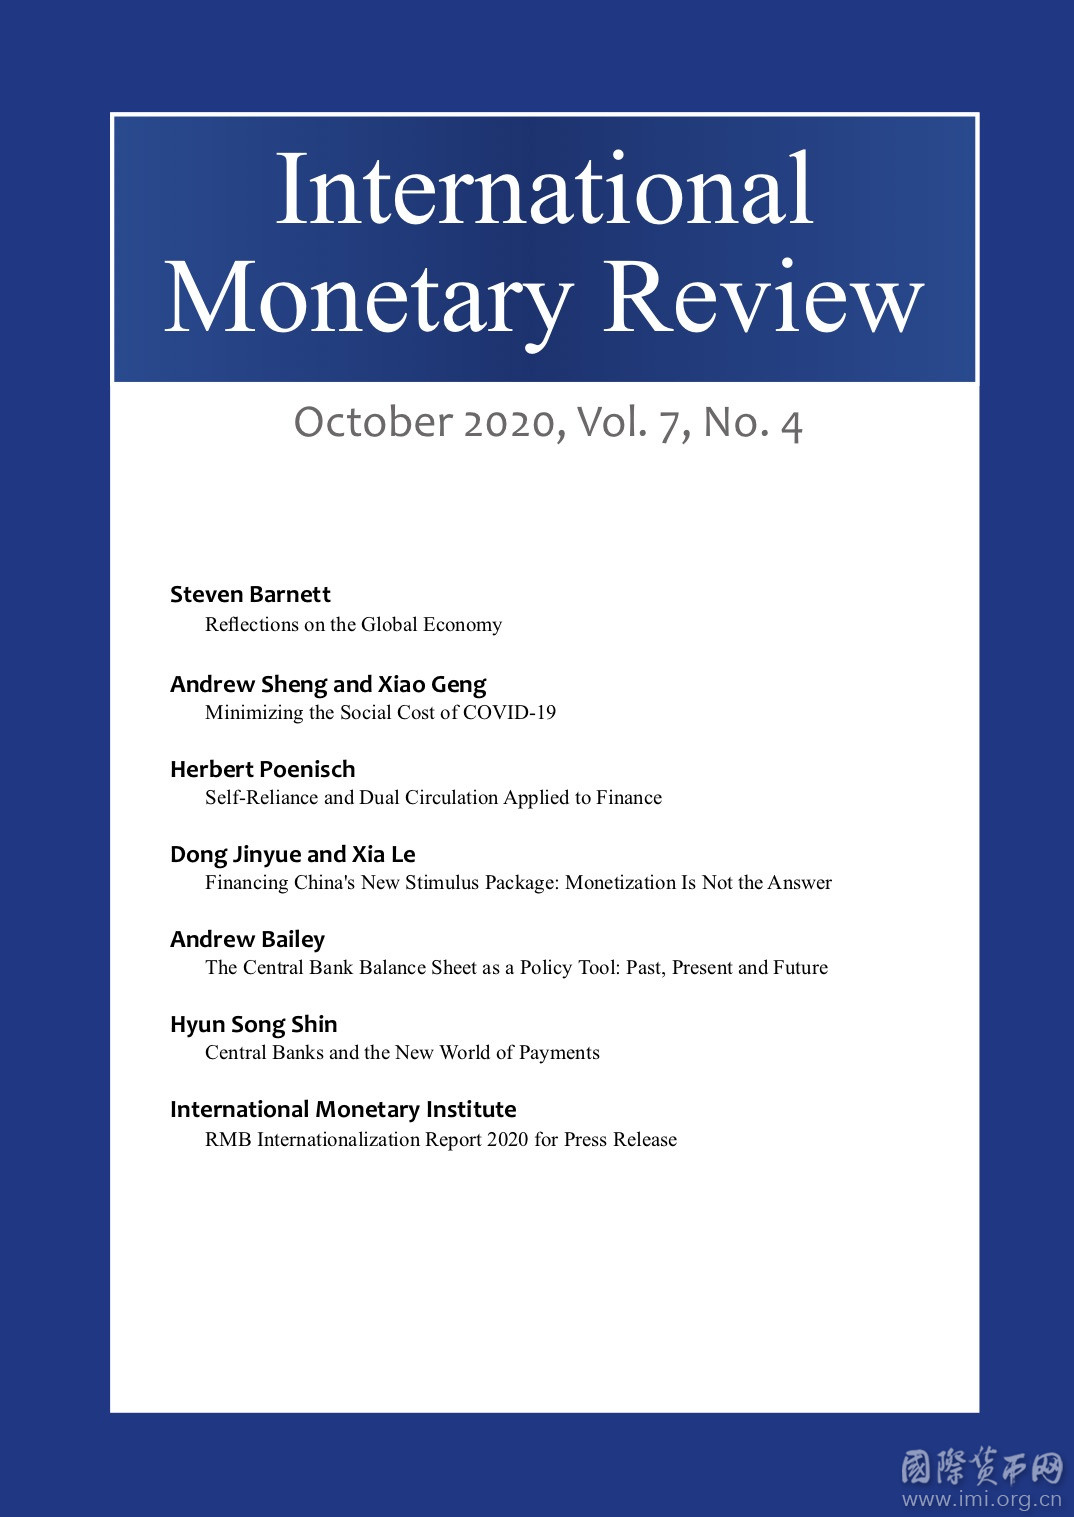 International Monetary Review, October 2020, Vol. 7 No. 4